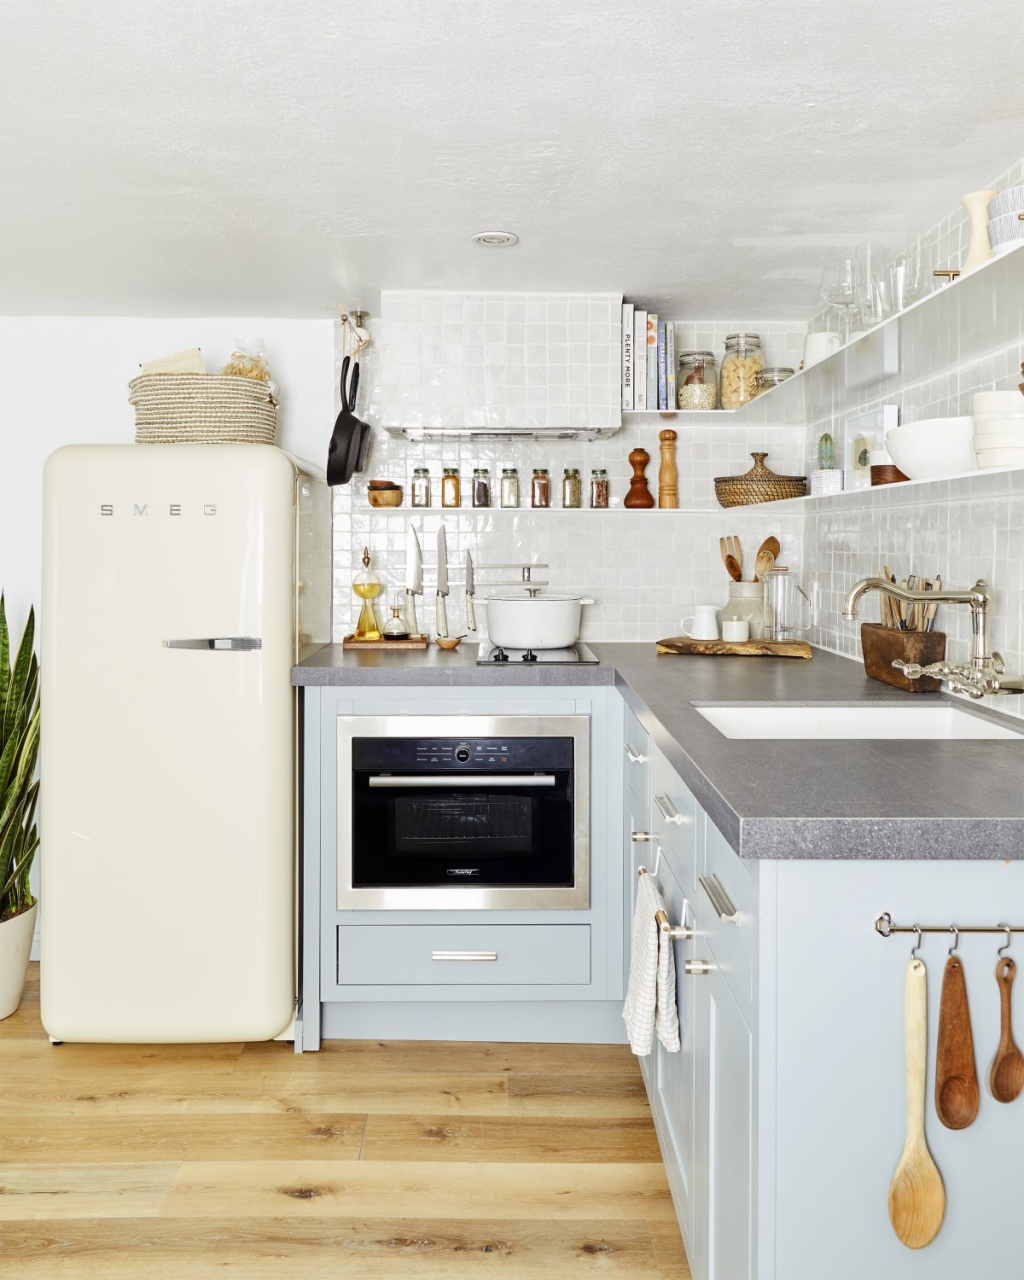 Simple retro kitchen